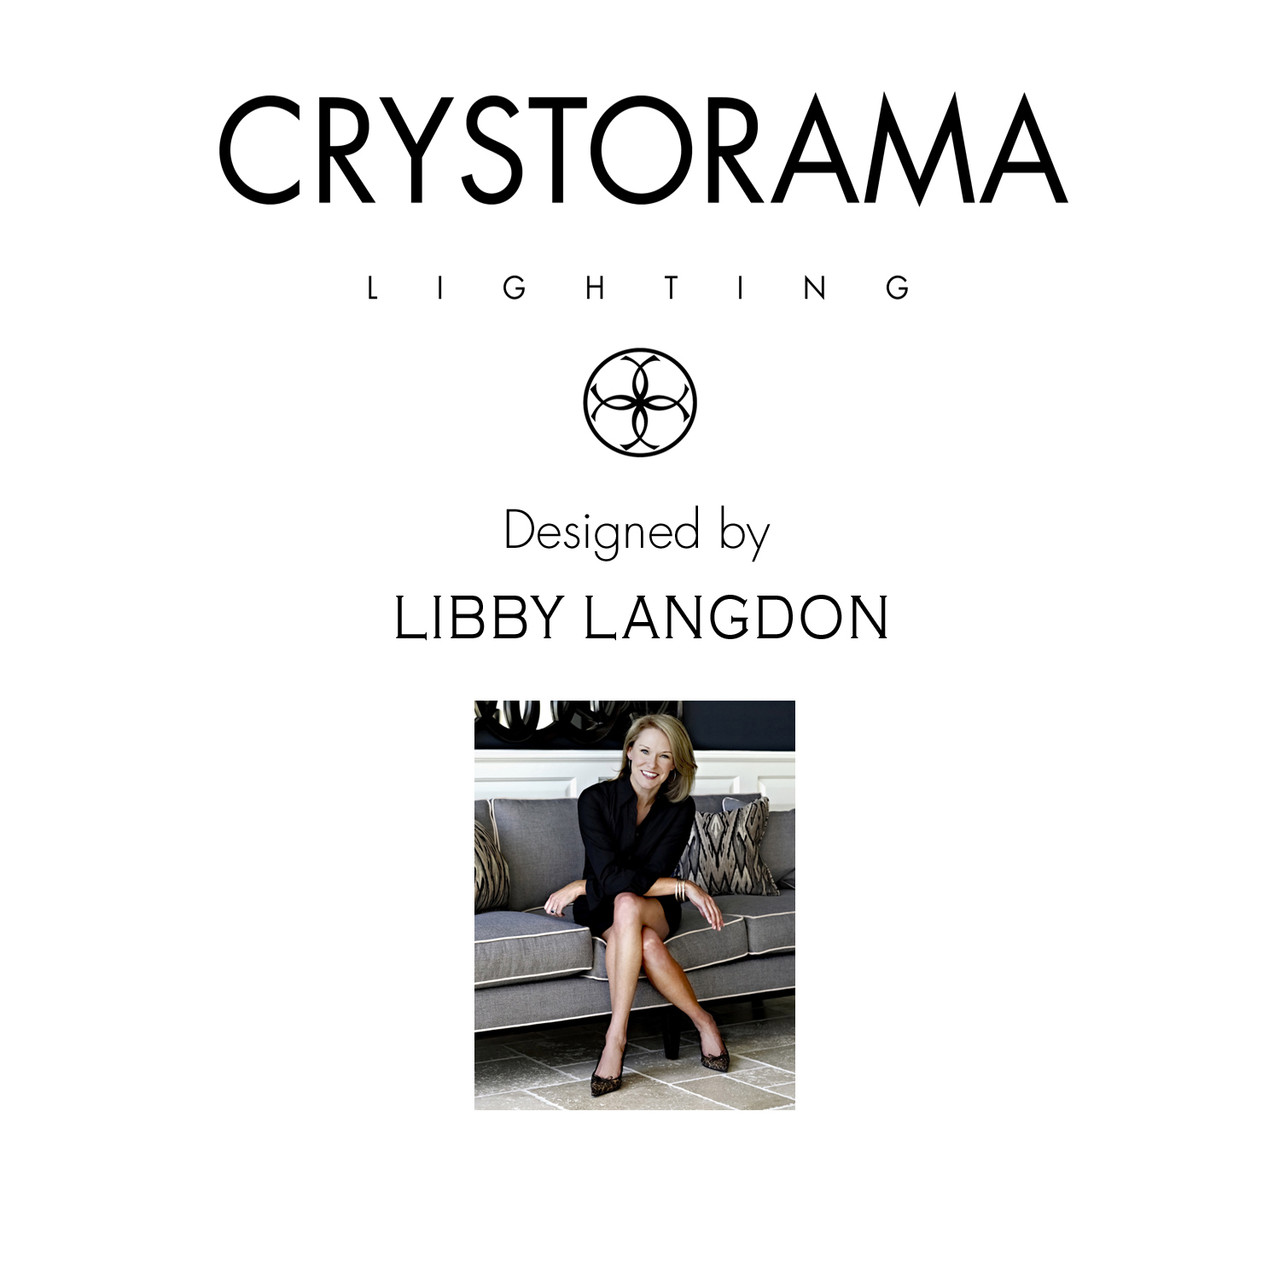 CRYSTORAMA ELL-B3002-PN Libby Langdon for Crystorama Elliot 2 Light Polished Nickel Wall Mount